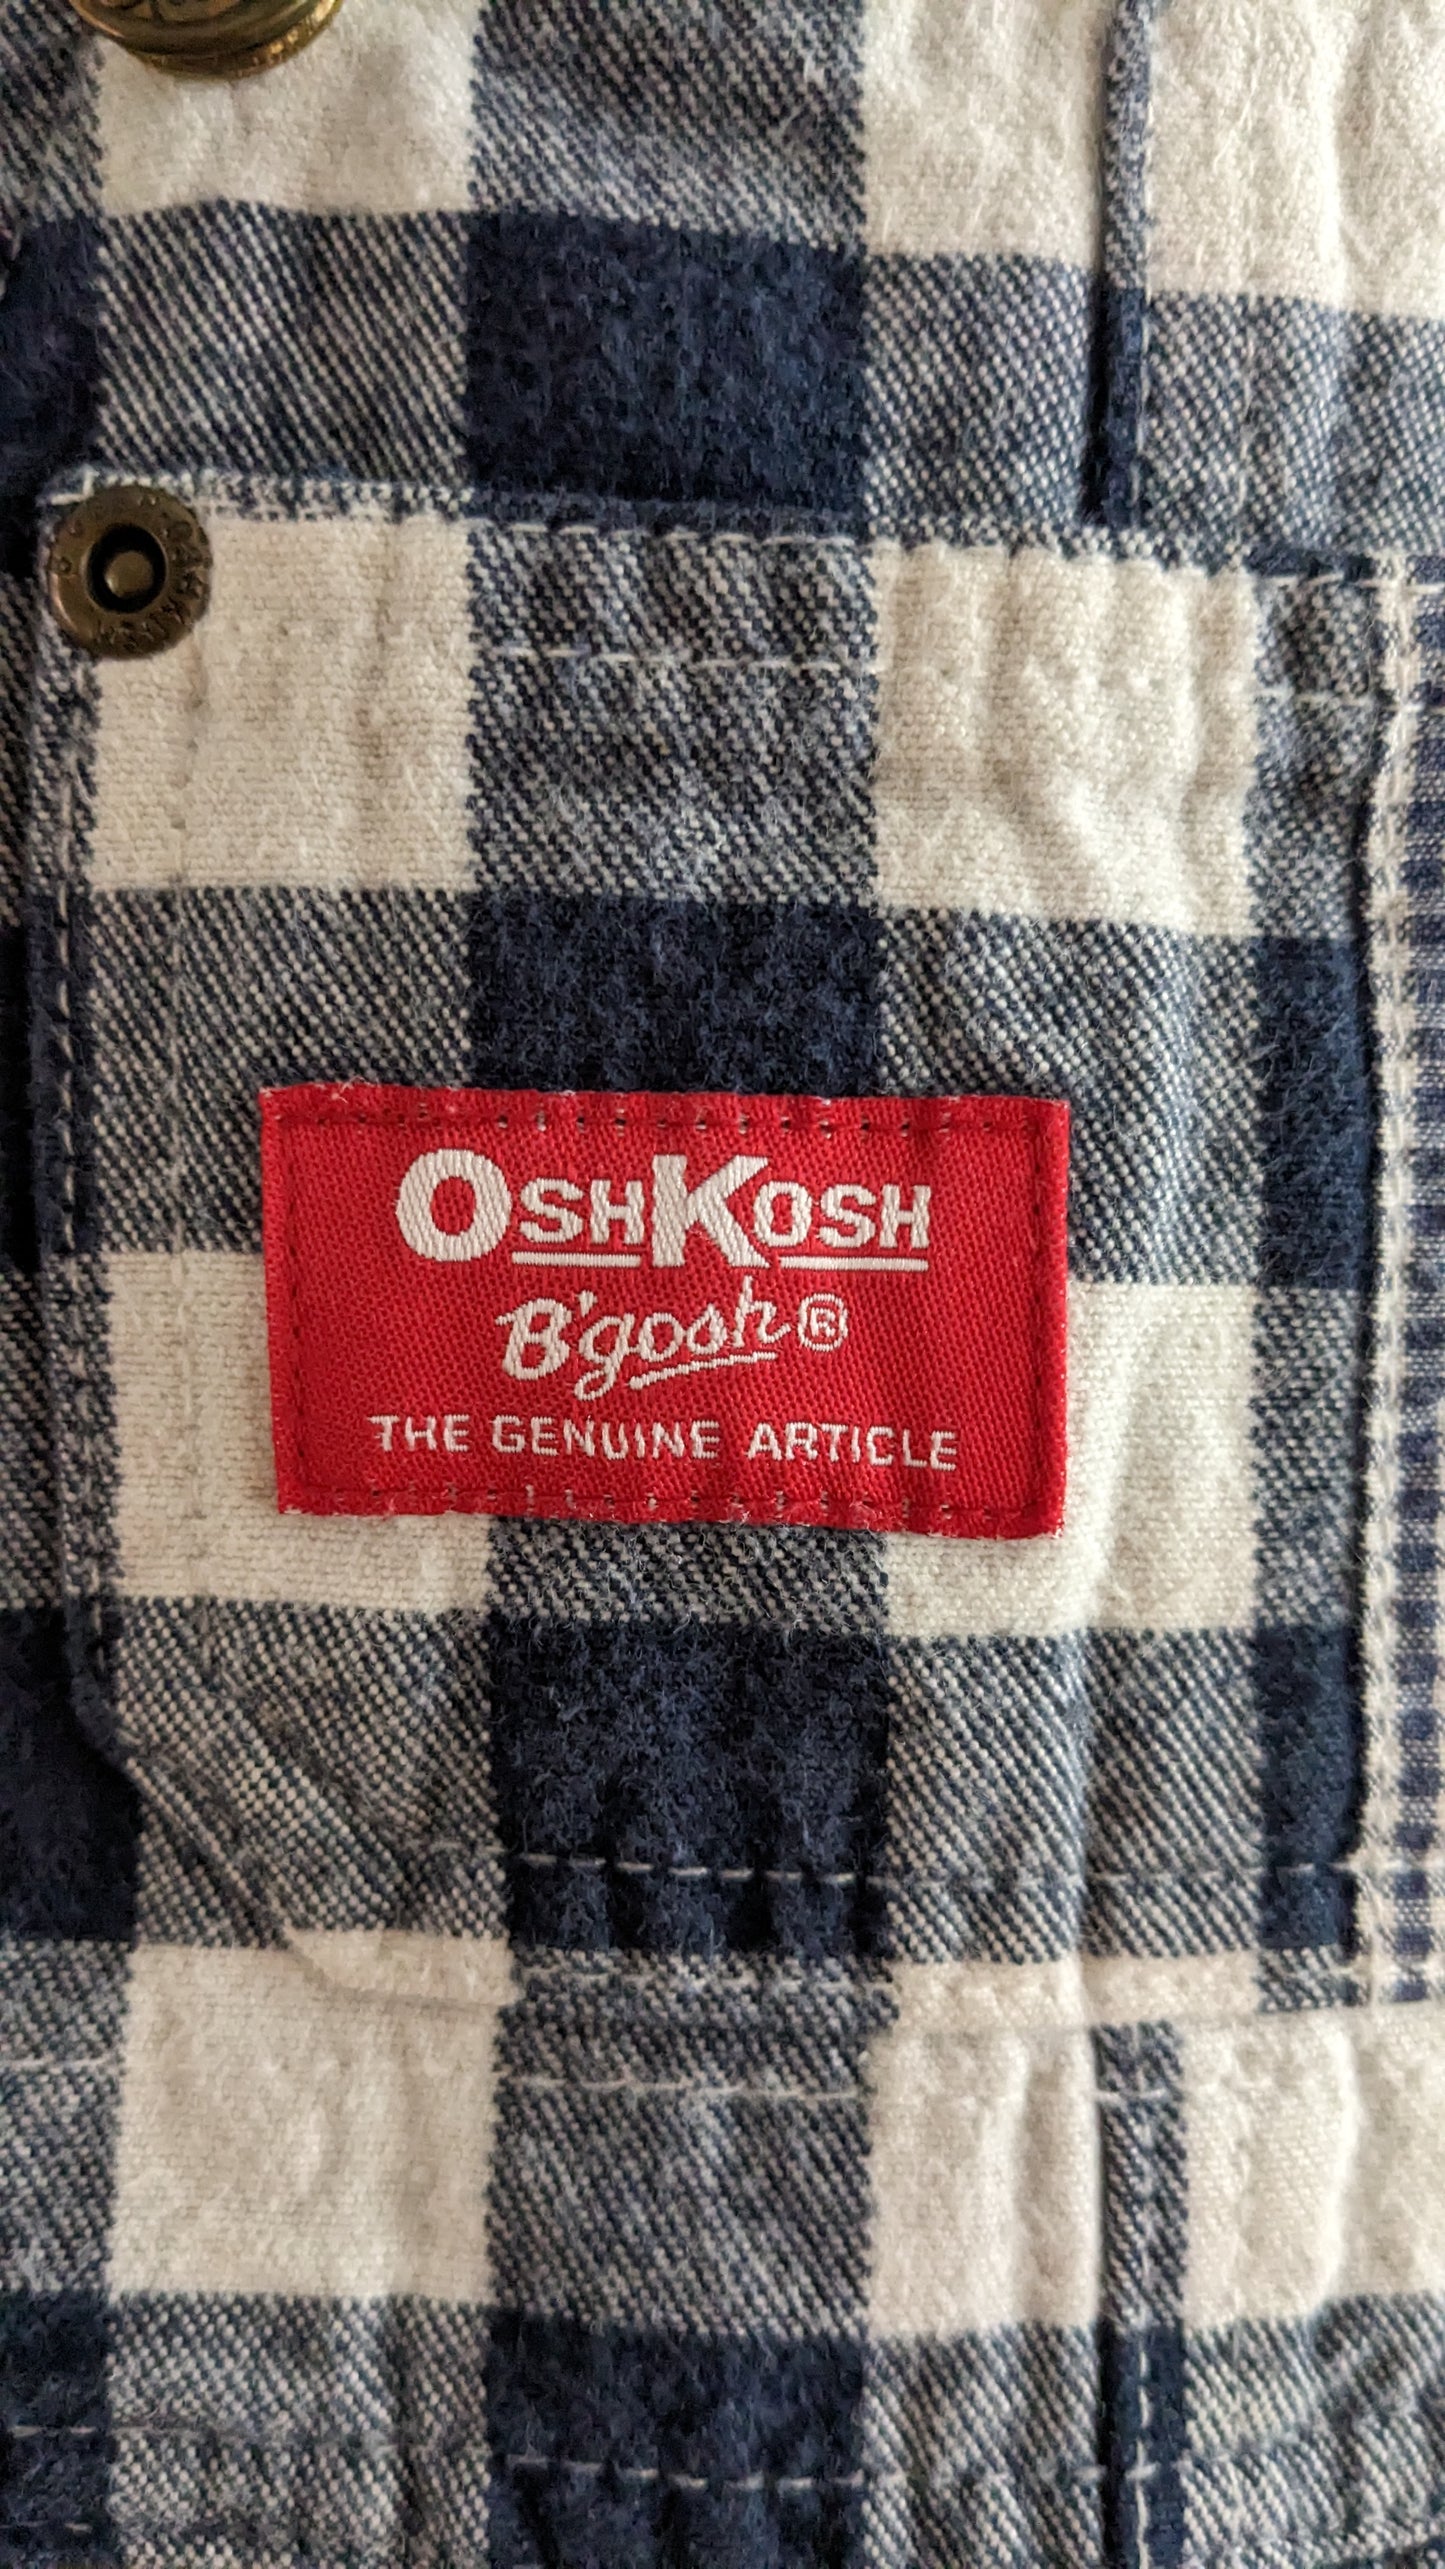 OshKosh b'Gosh big check overall